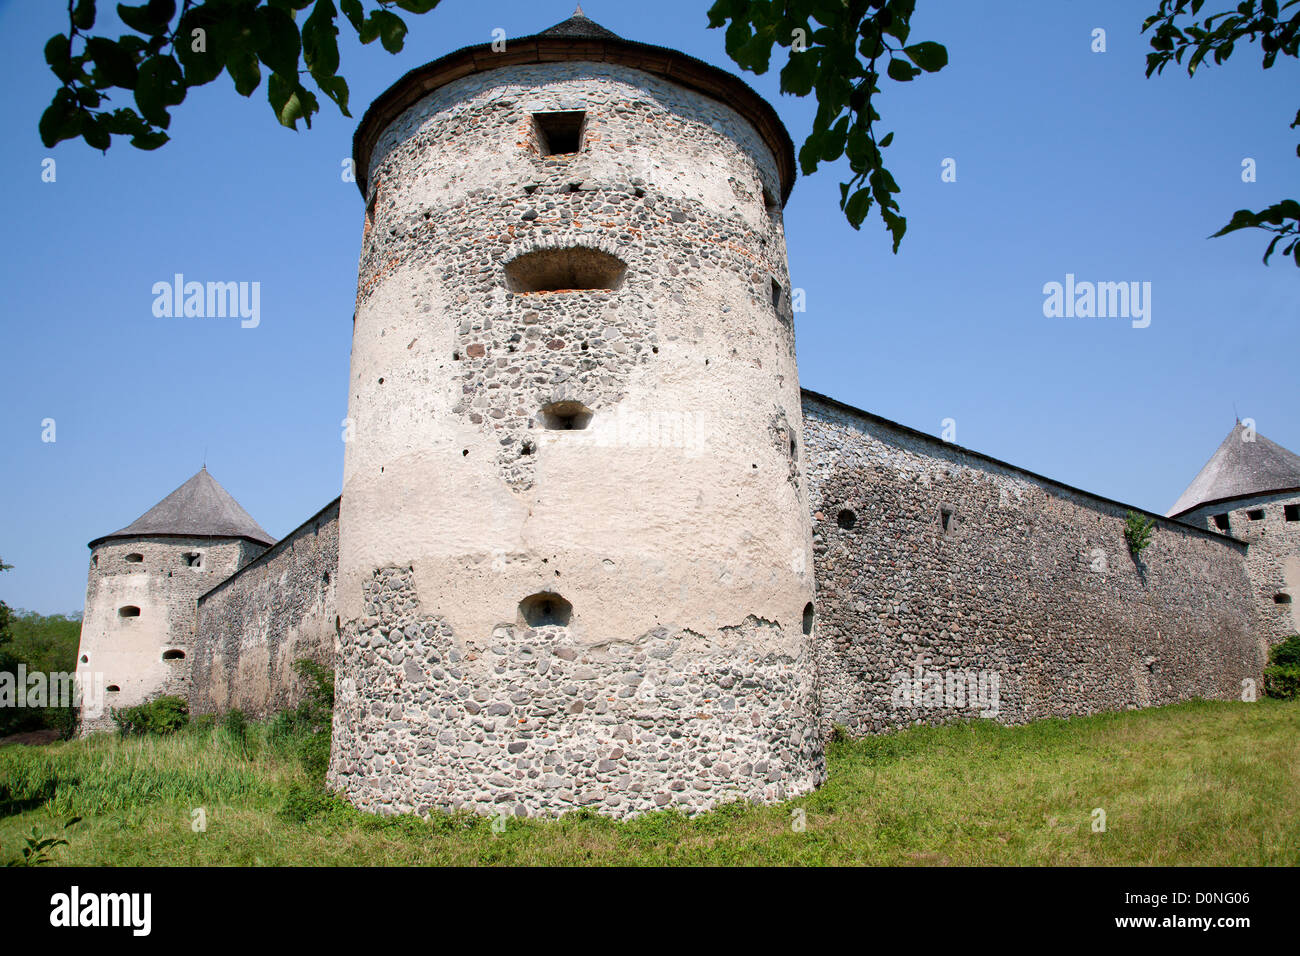 Slovakia - Bzovik castle - old premonstratensian cloister Stock Photo